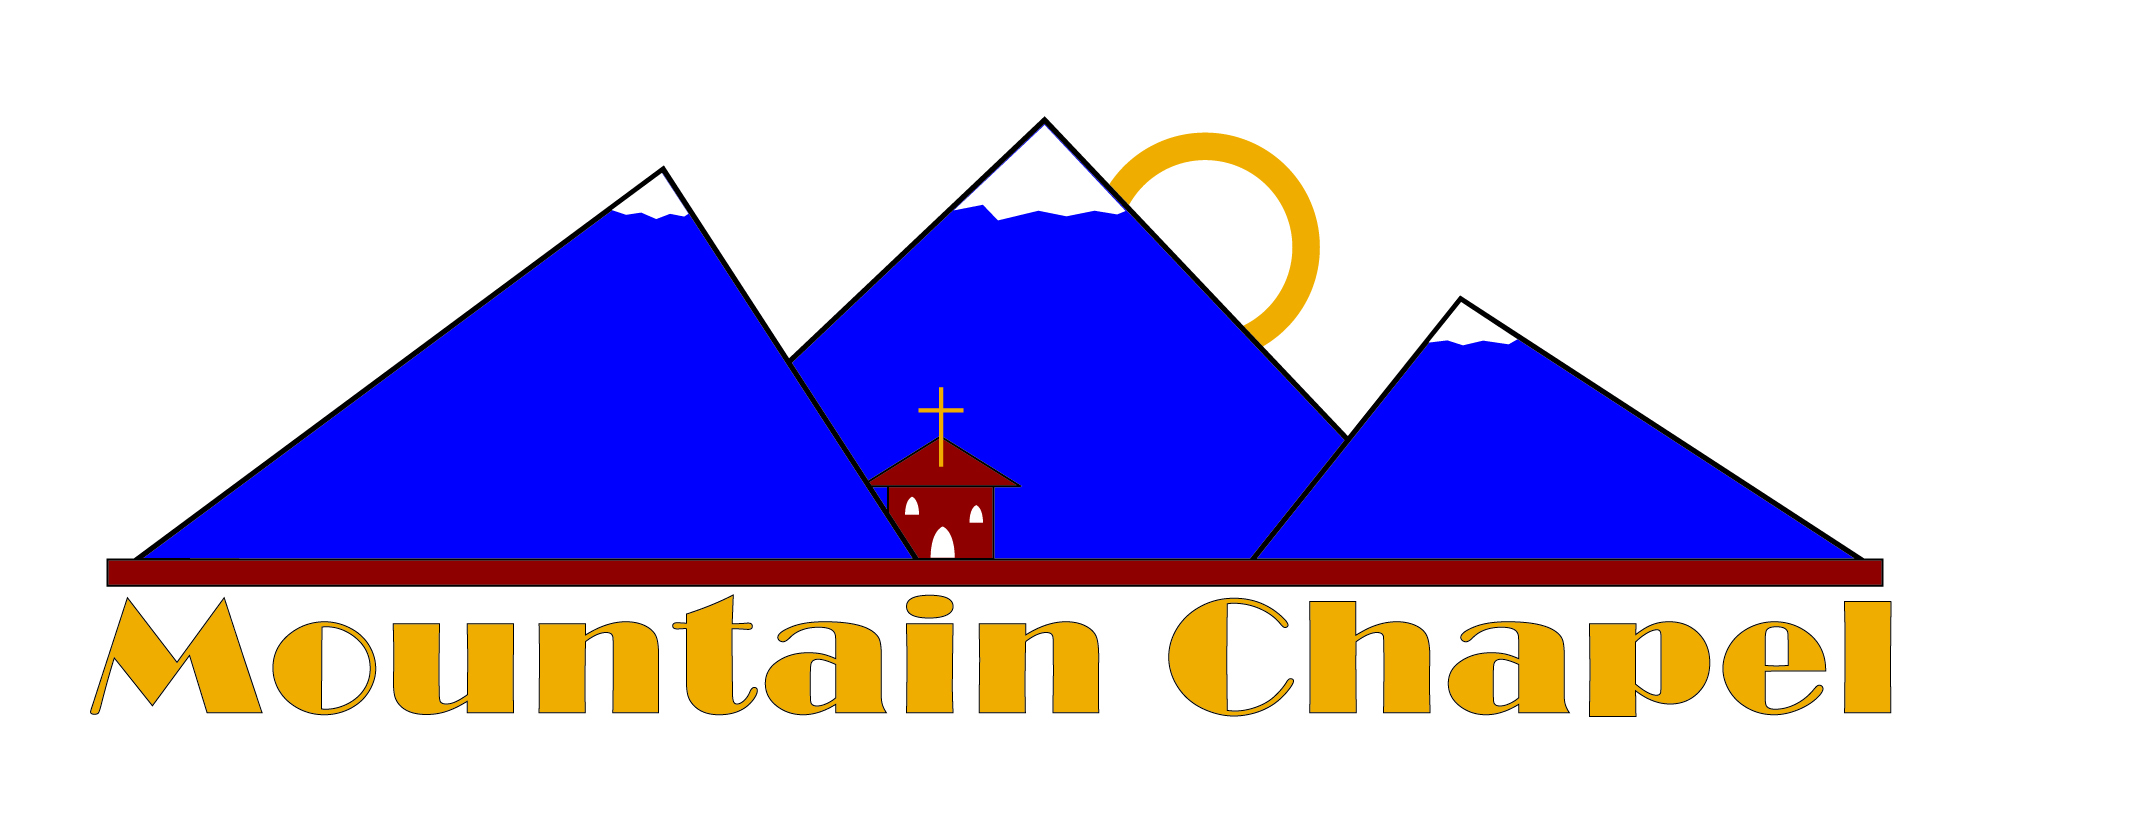 Mountain Chapel logo